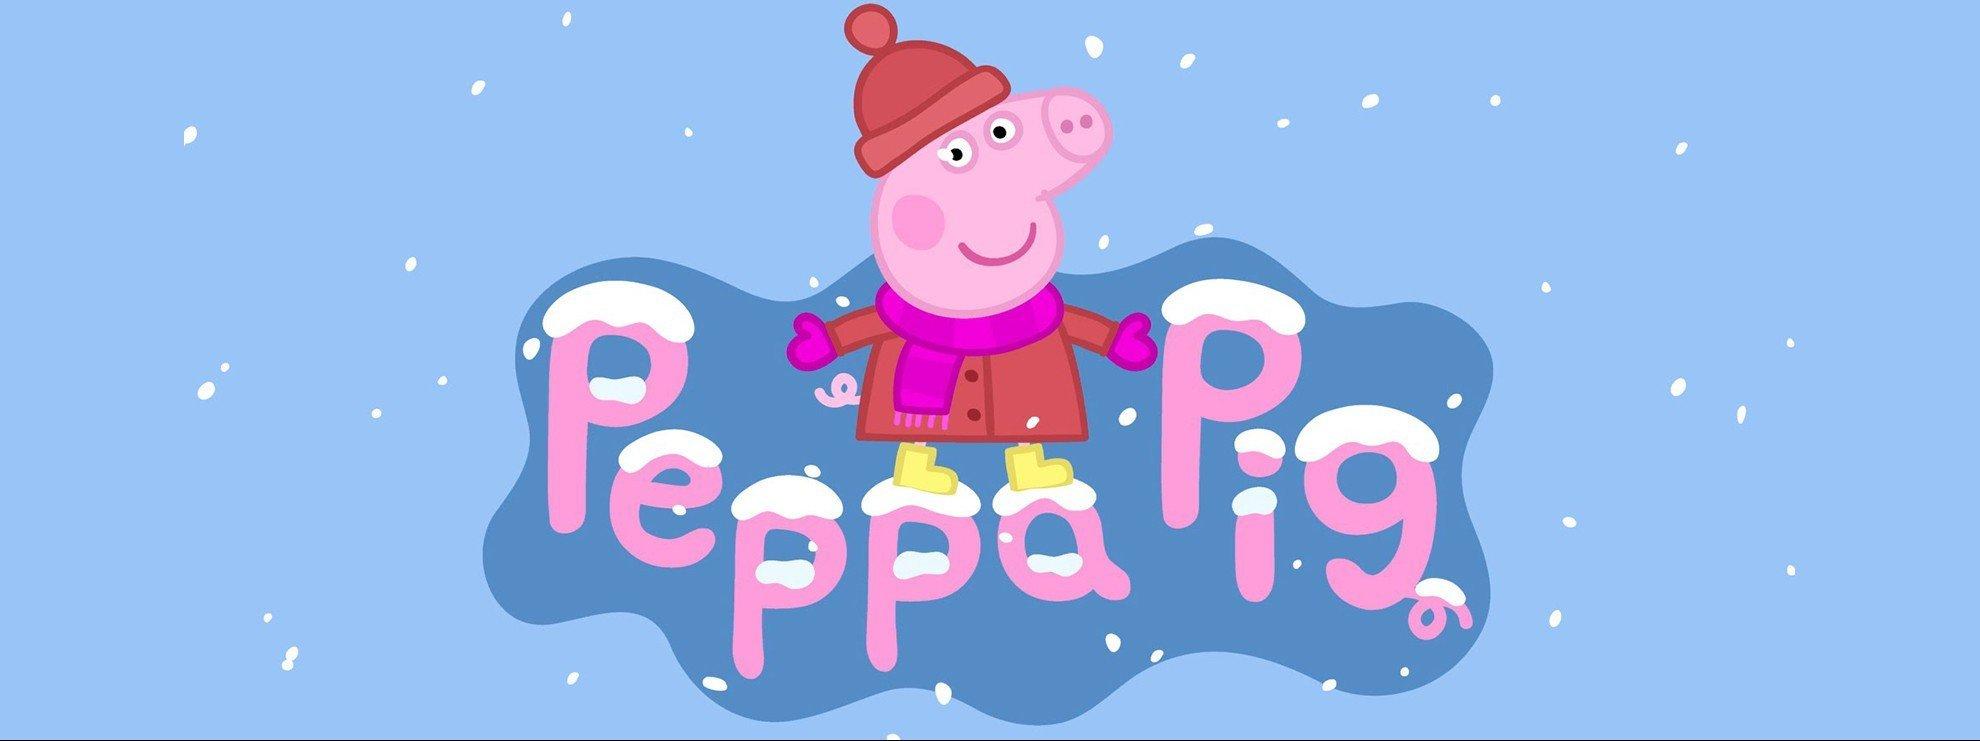 Peppa Pig Santa Claus mood Kiev buy concert tickets